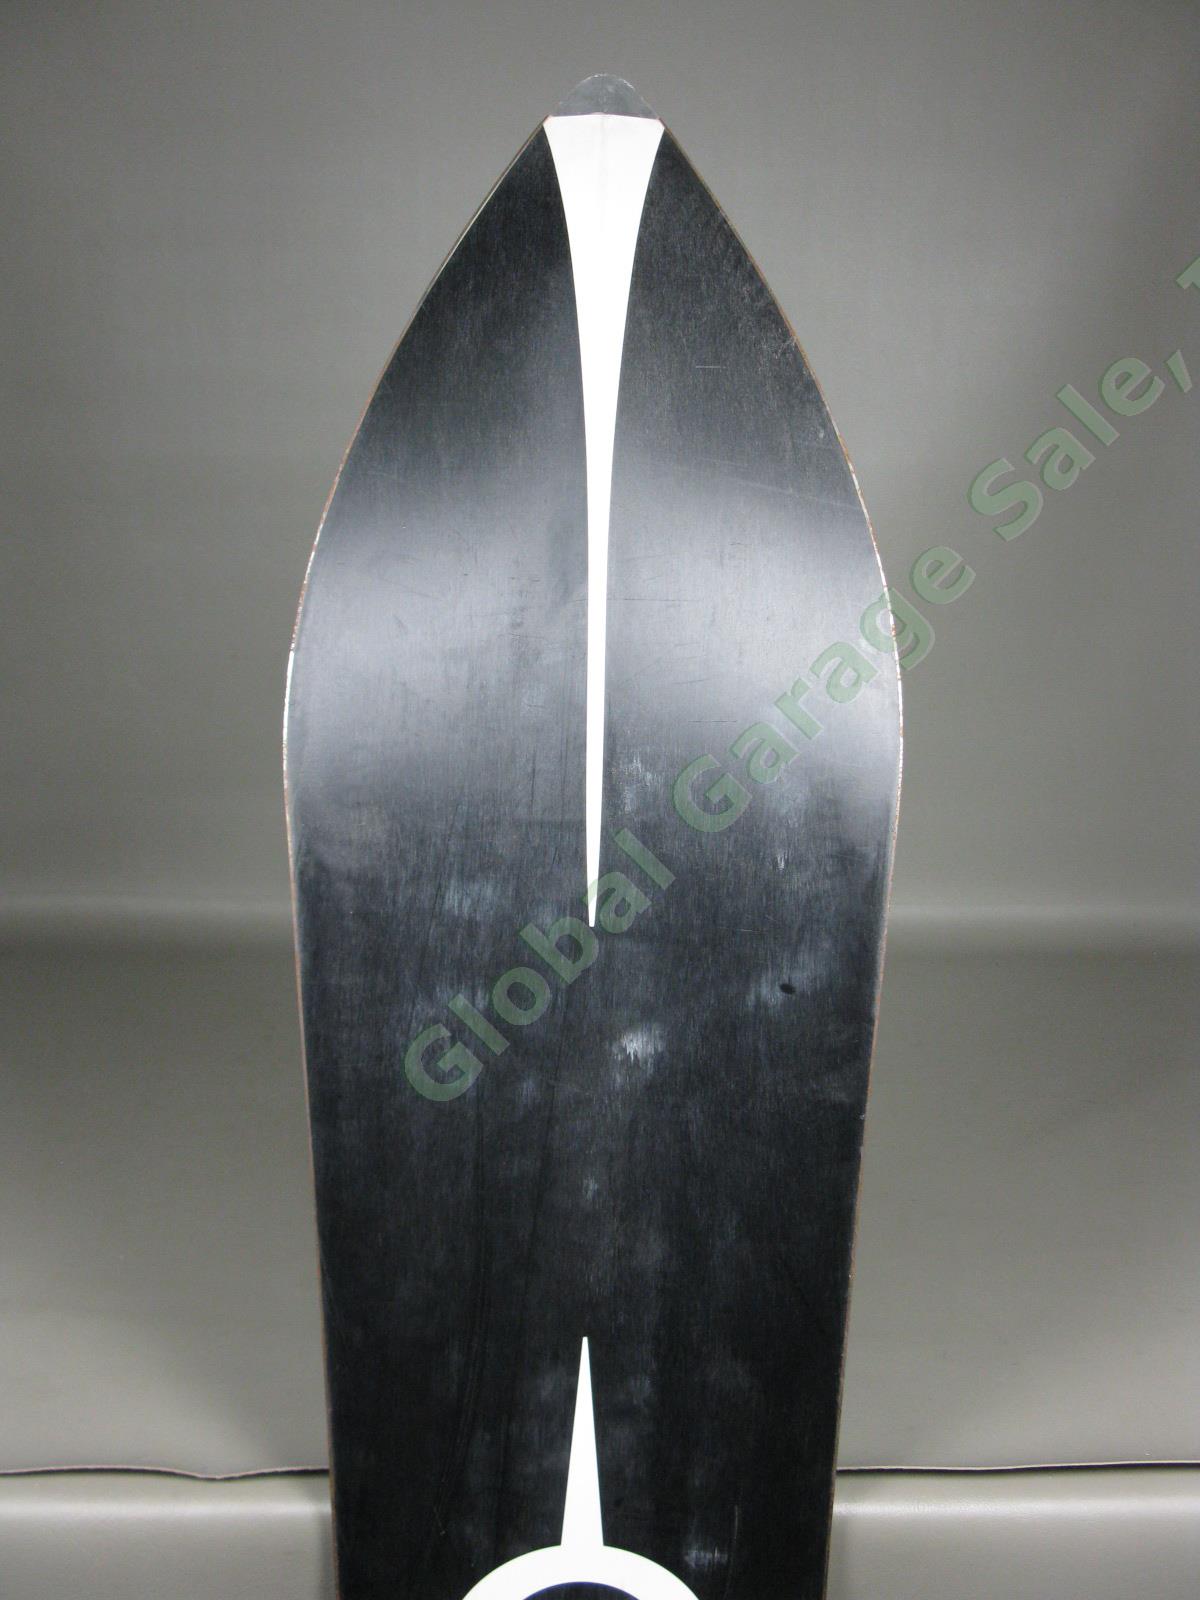 Vtg Original O Sin 4807 Swallowtail Snowboard 168cm Woodcore Spain No Bindings 7